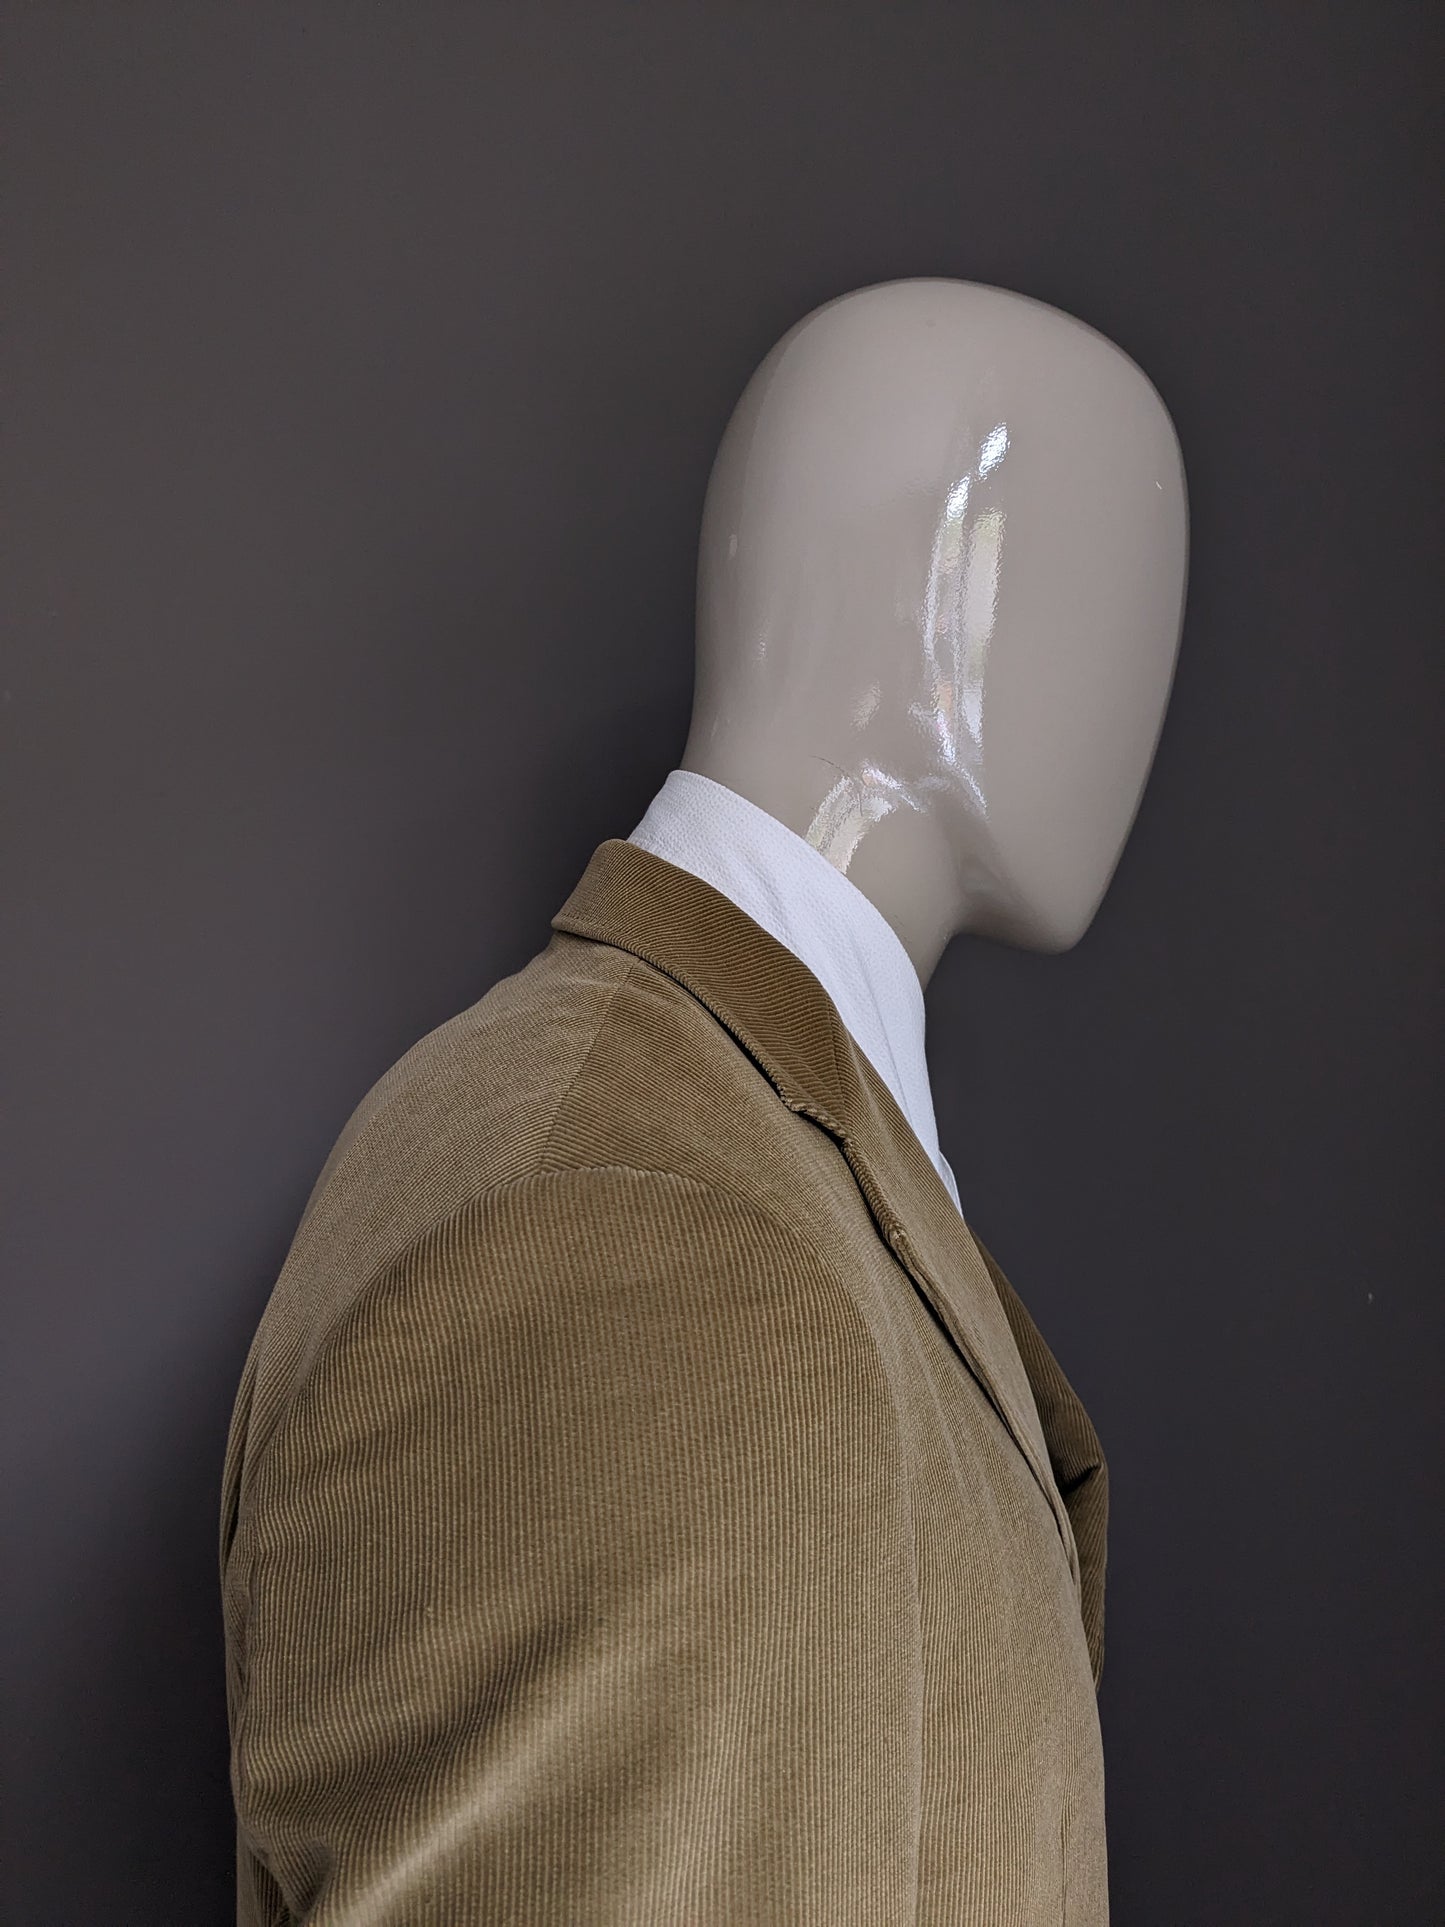 Massimo Dutti CIB Jacket. Color marrón claro. Tamaño 50 / M.